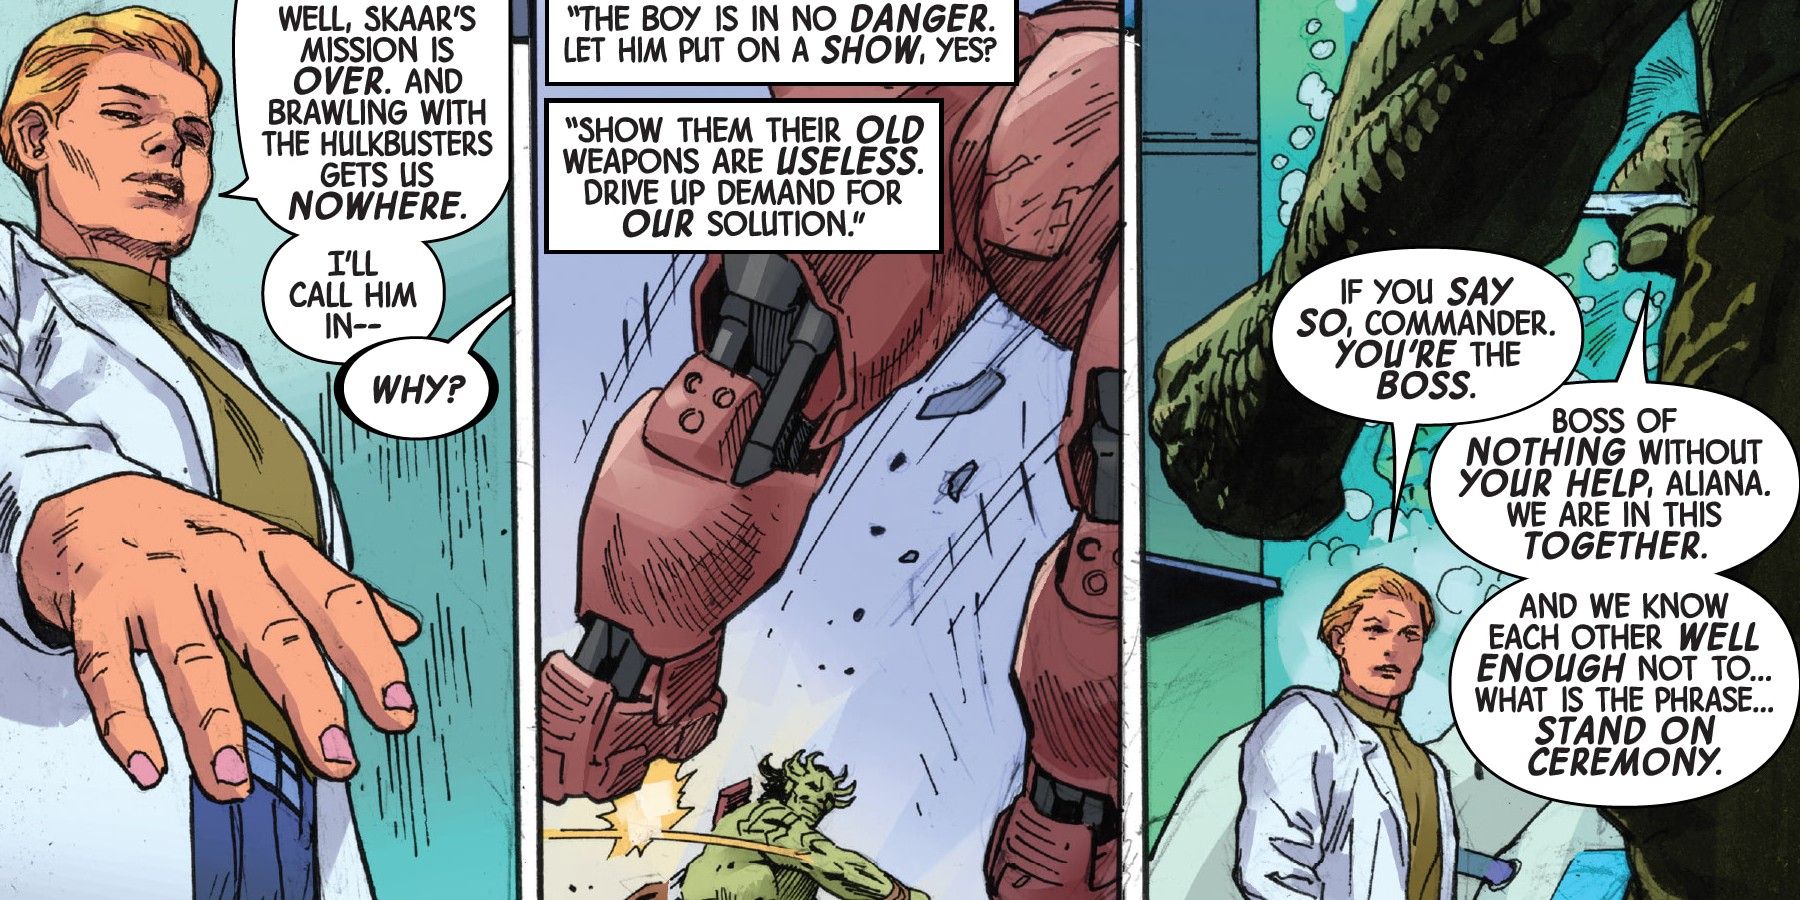 Abomination Talking About Skaar Destroying Hulkbusters in Gamma Flight #2